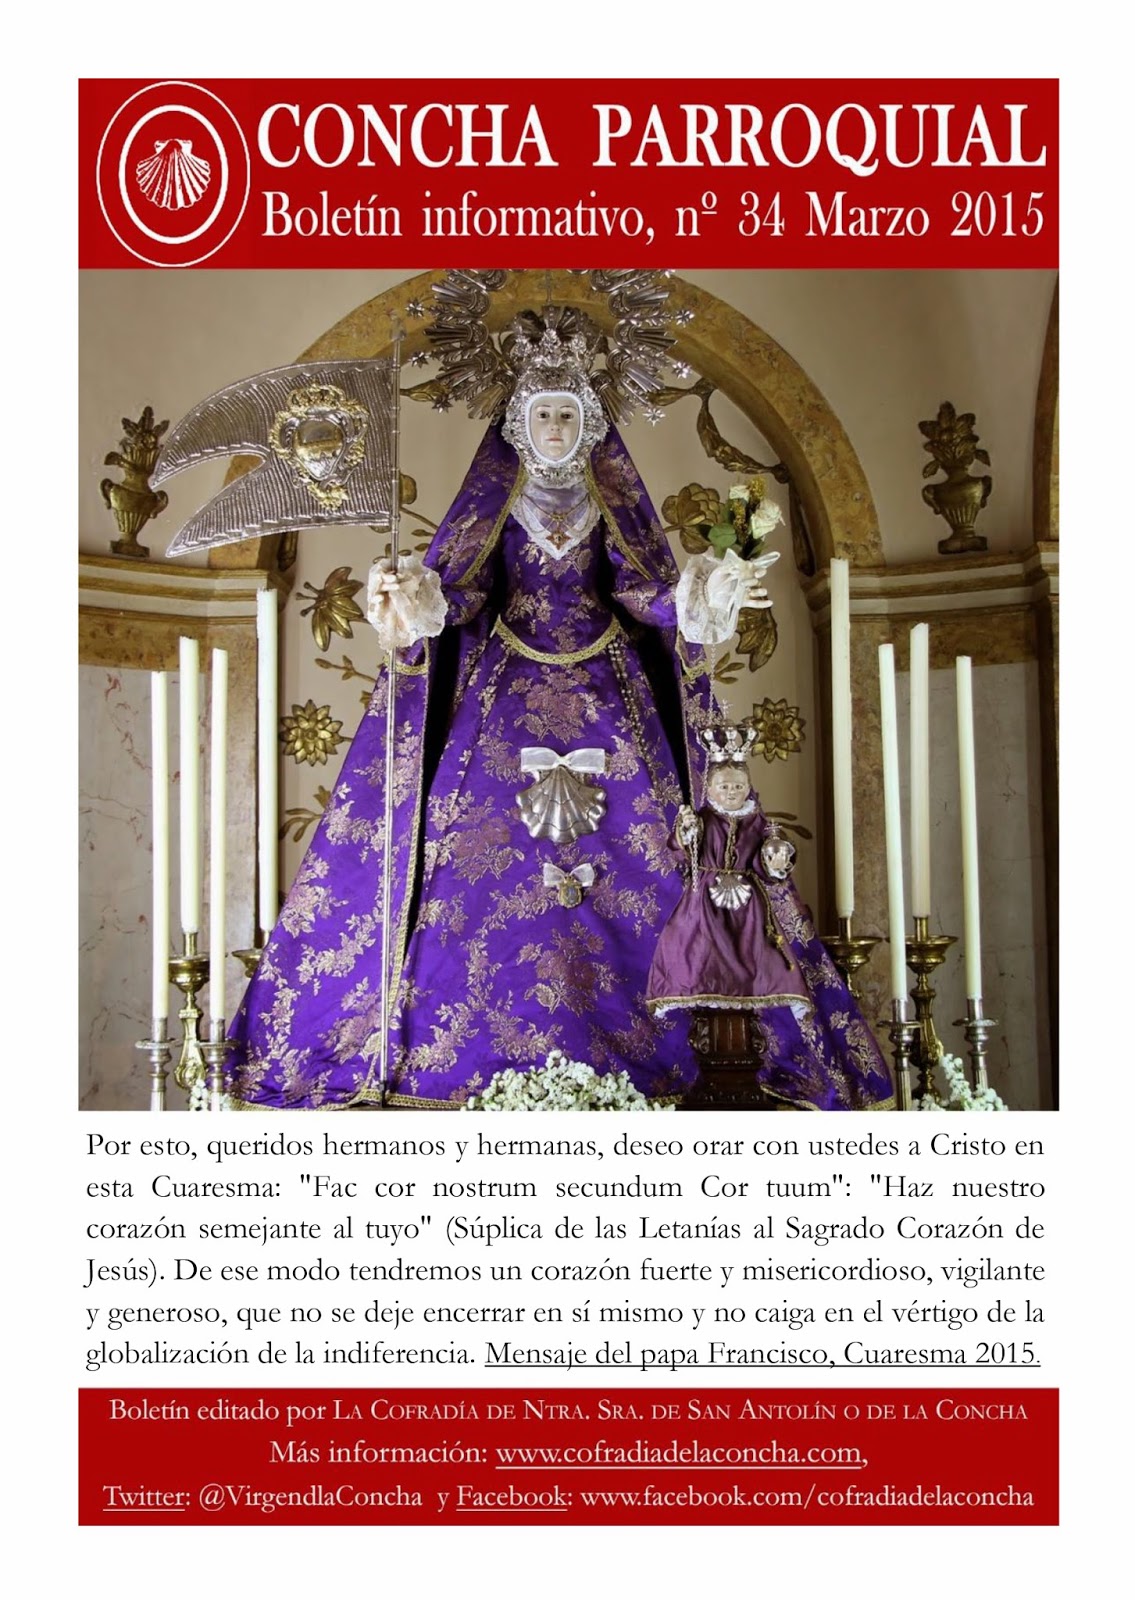  http://www.cofradiadelaconcha.com/boletines/2015/marzo2015.pdf